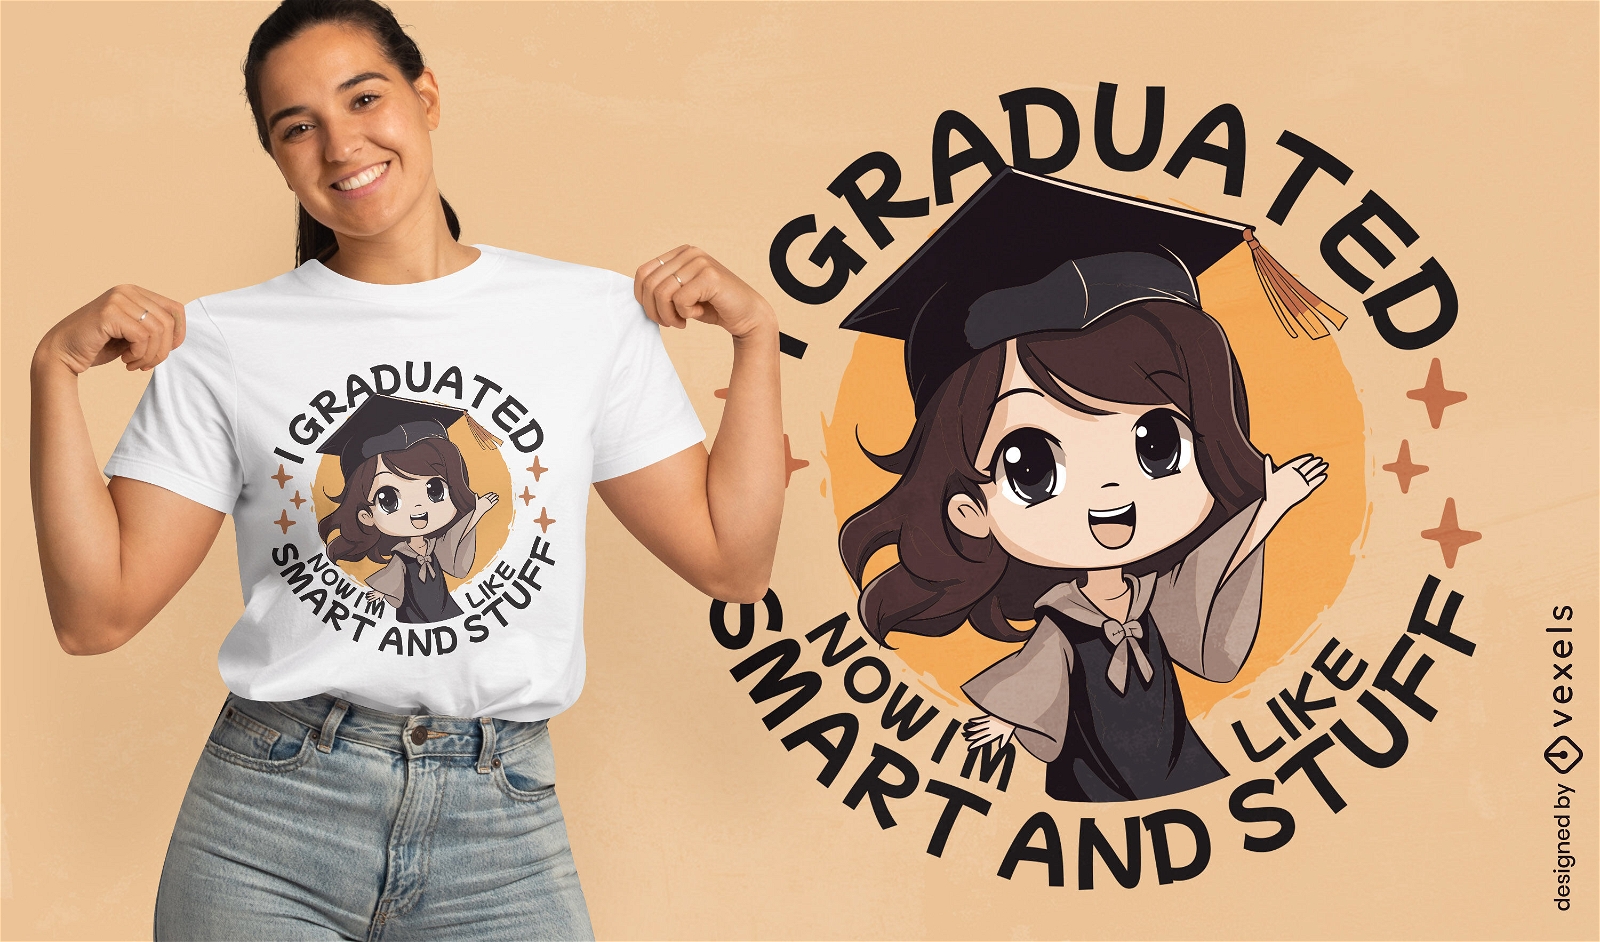 Funny graduation girl quote t-shirt design